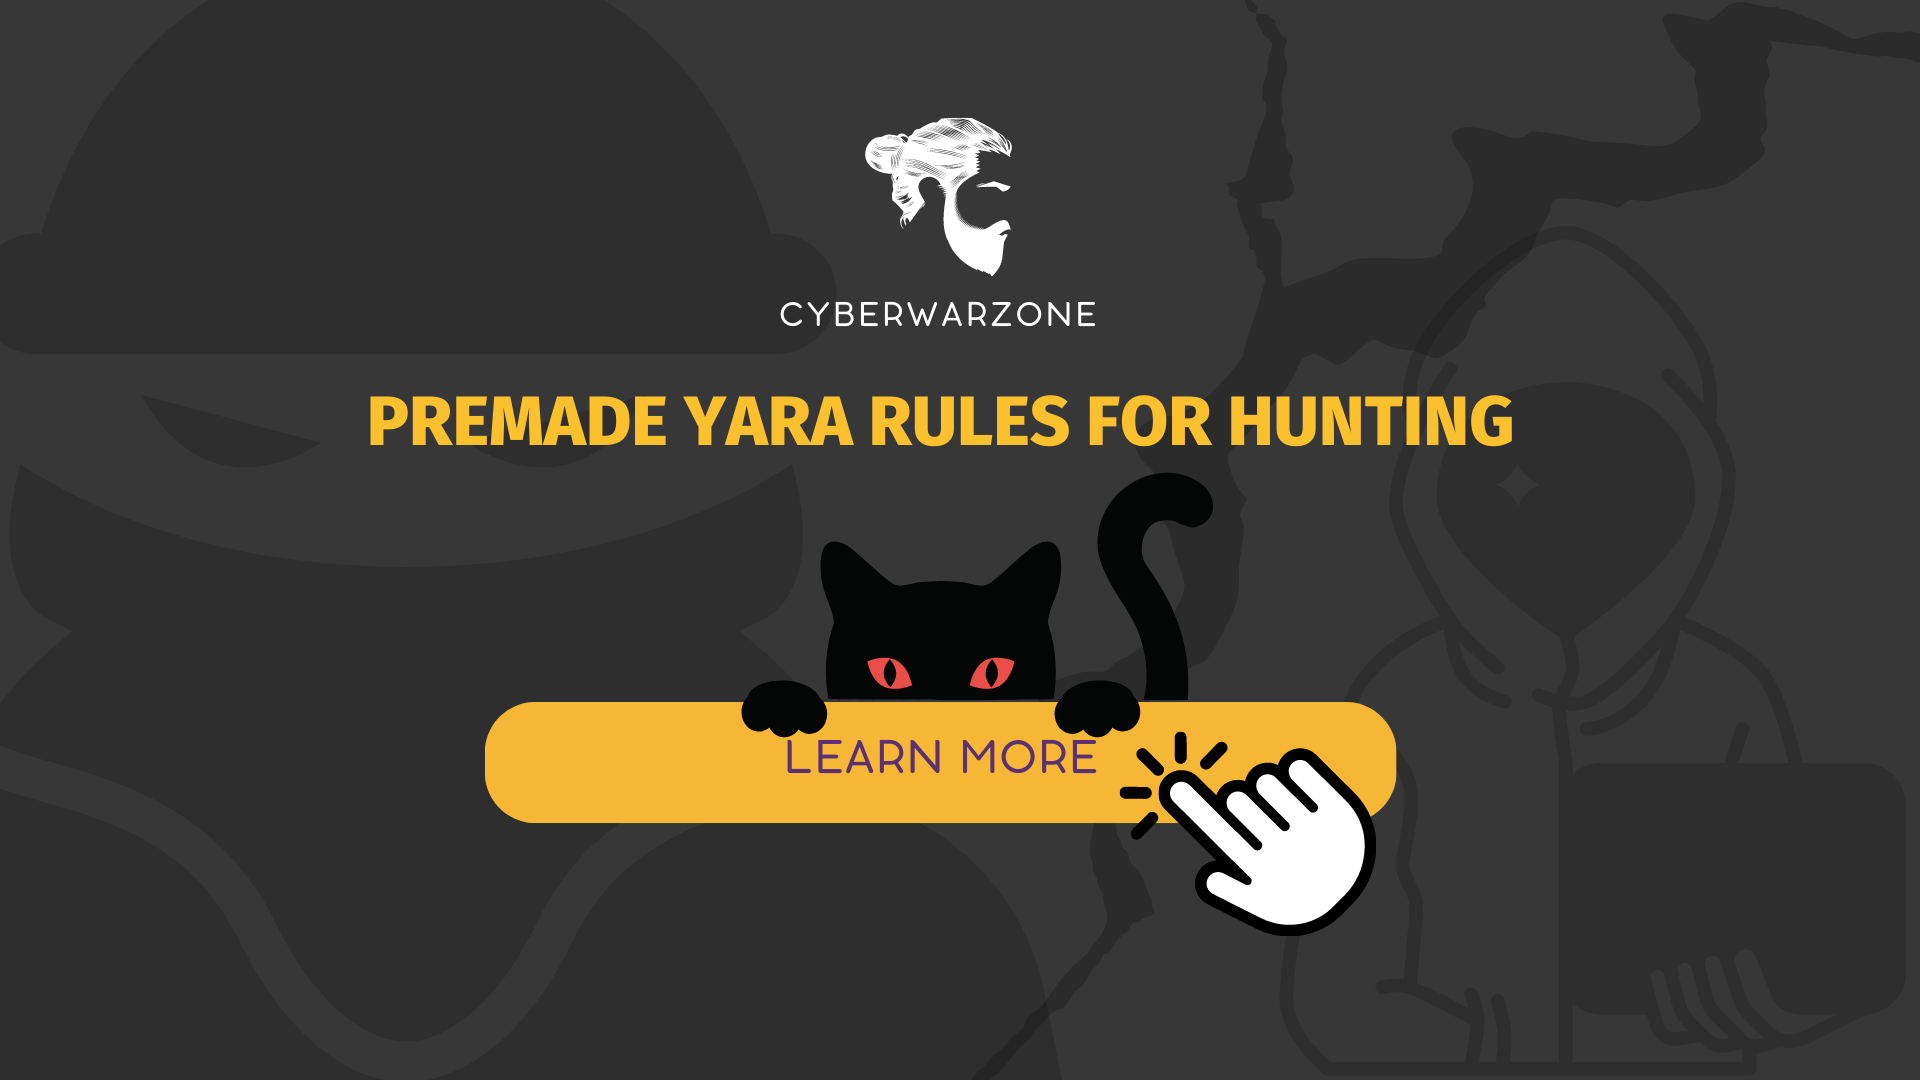 Premade YARA rules for hunting